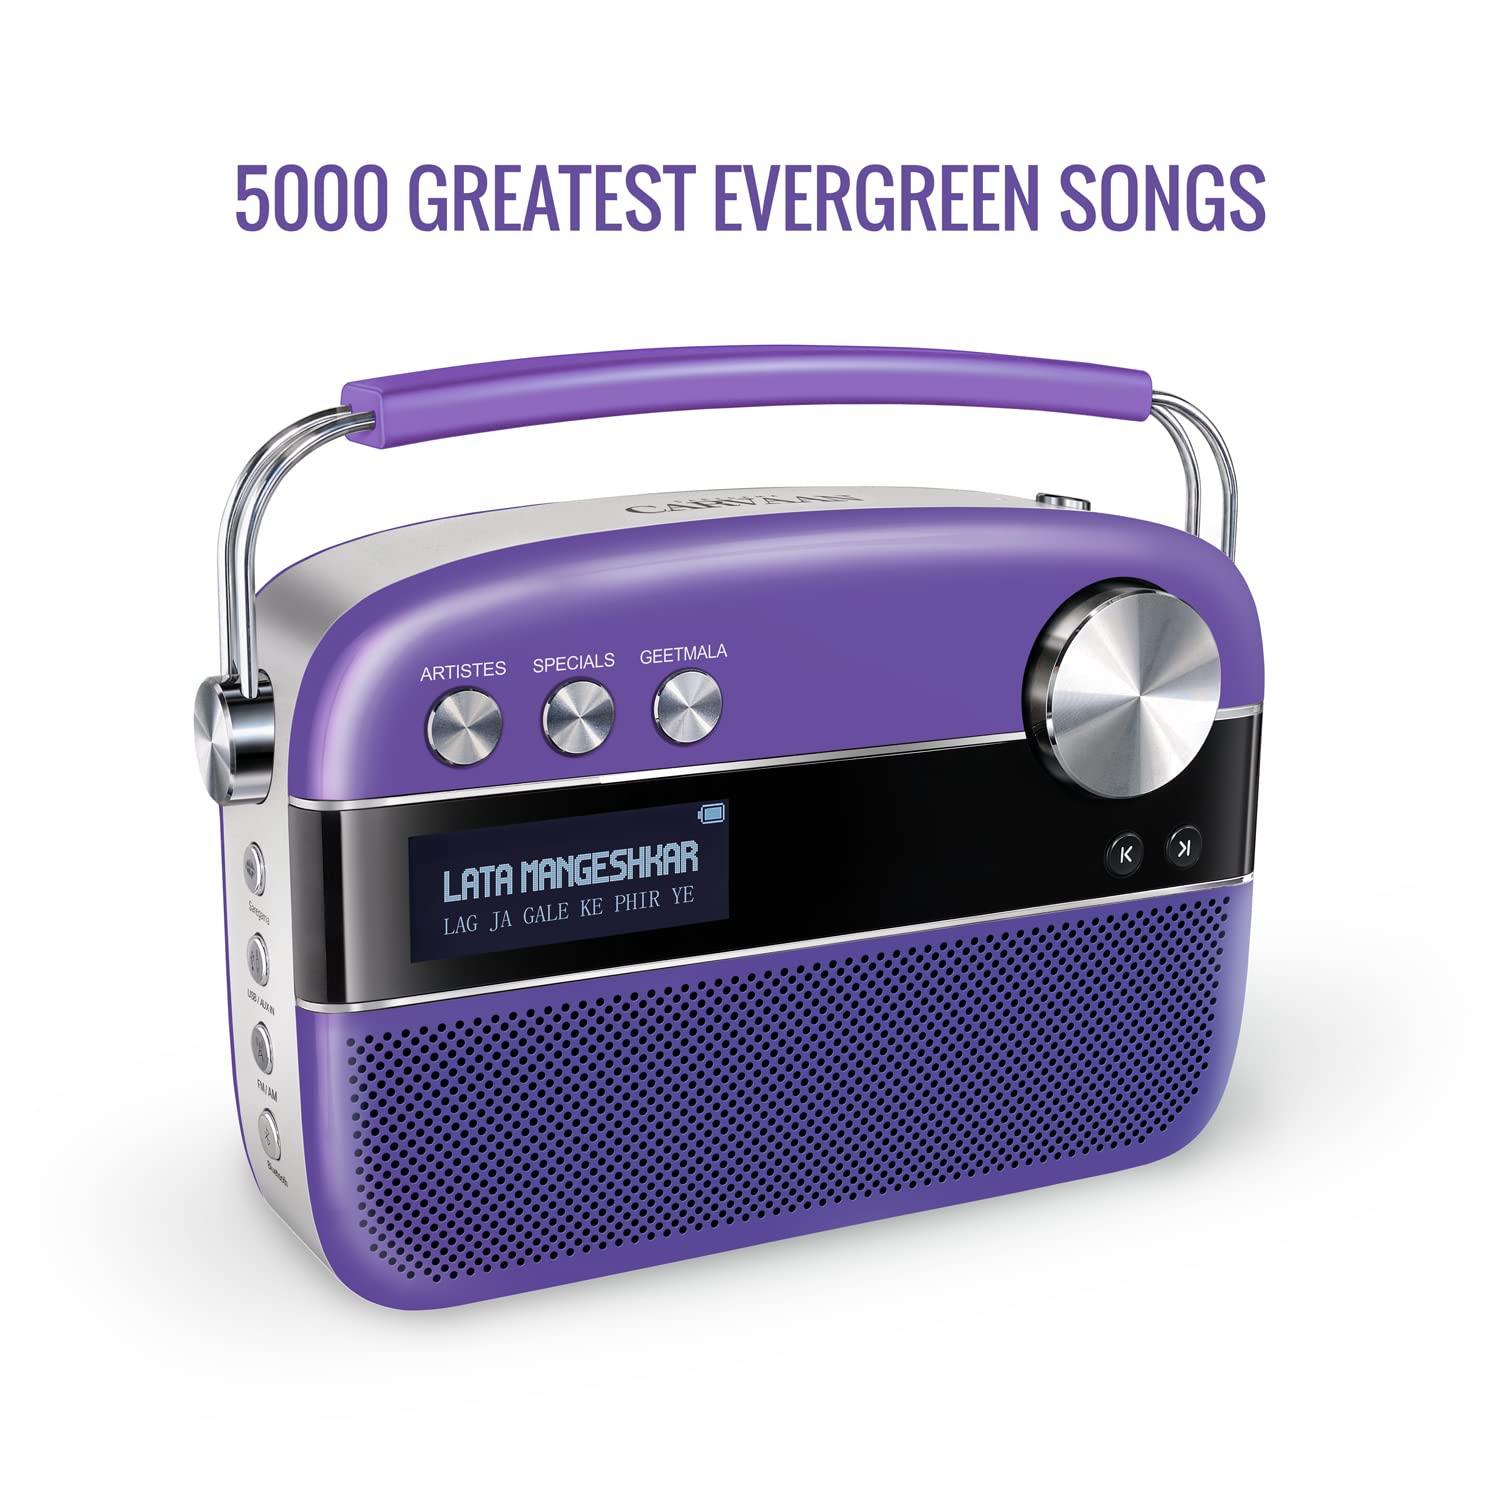 Saregama Carvaan Premium (Pop Colour Range) Hindi - Portable Music Player with 5000 Preloaded Songs, FM/BT/AUX (Orchid purple)